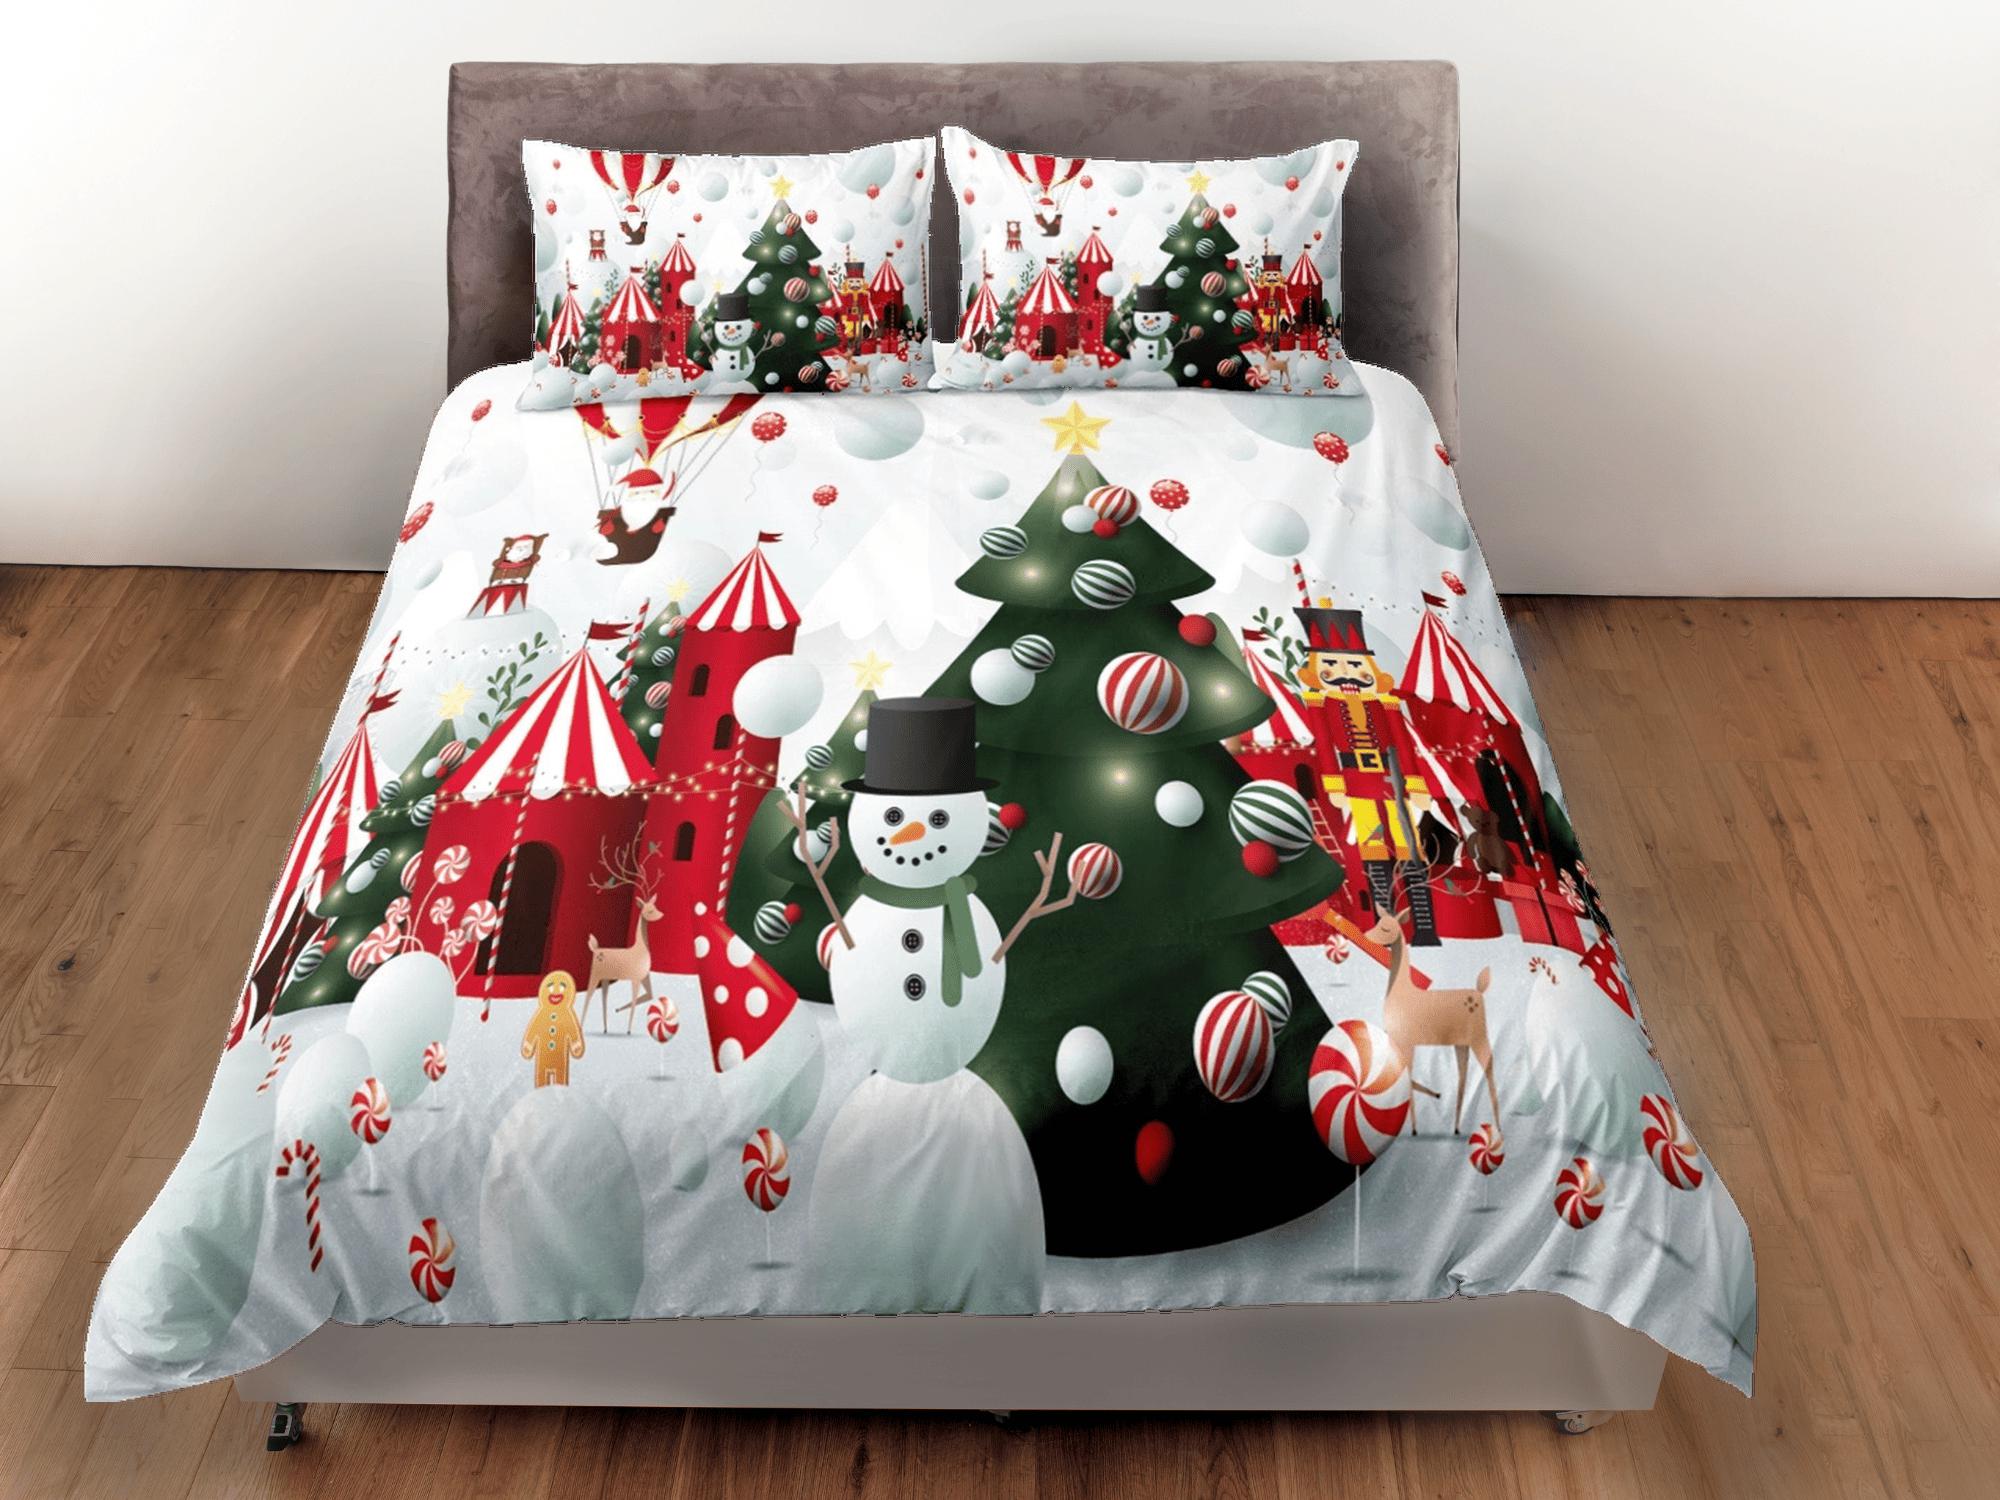 daintyduvet Winter Snowman Christmas bedding & pillowcase holiday gift duvet cover king queen full twin toddler bedding baby Christmas farmhouse decor